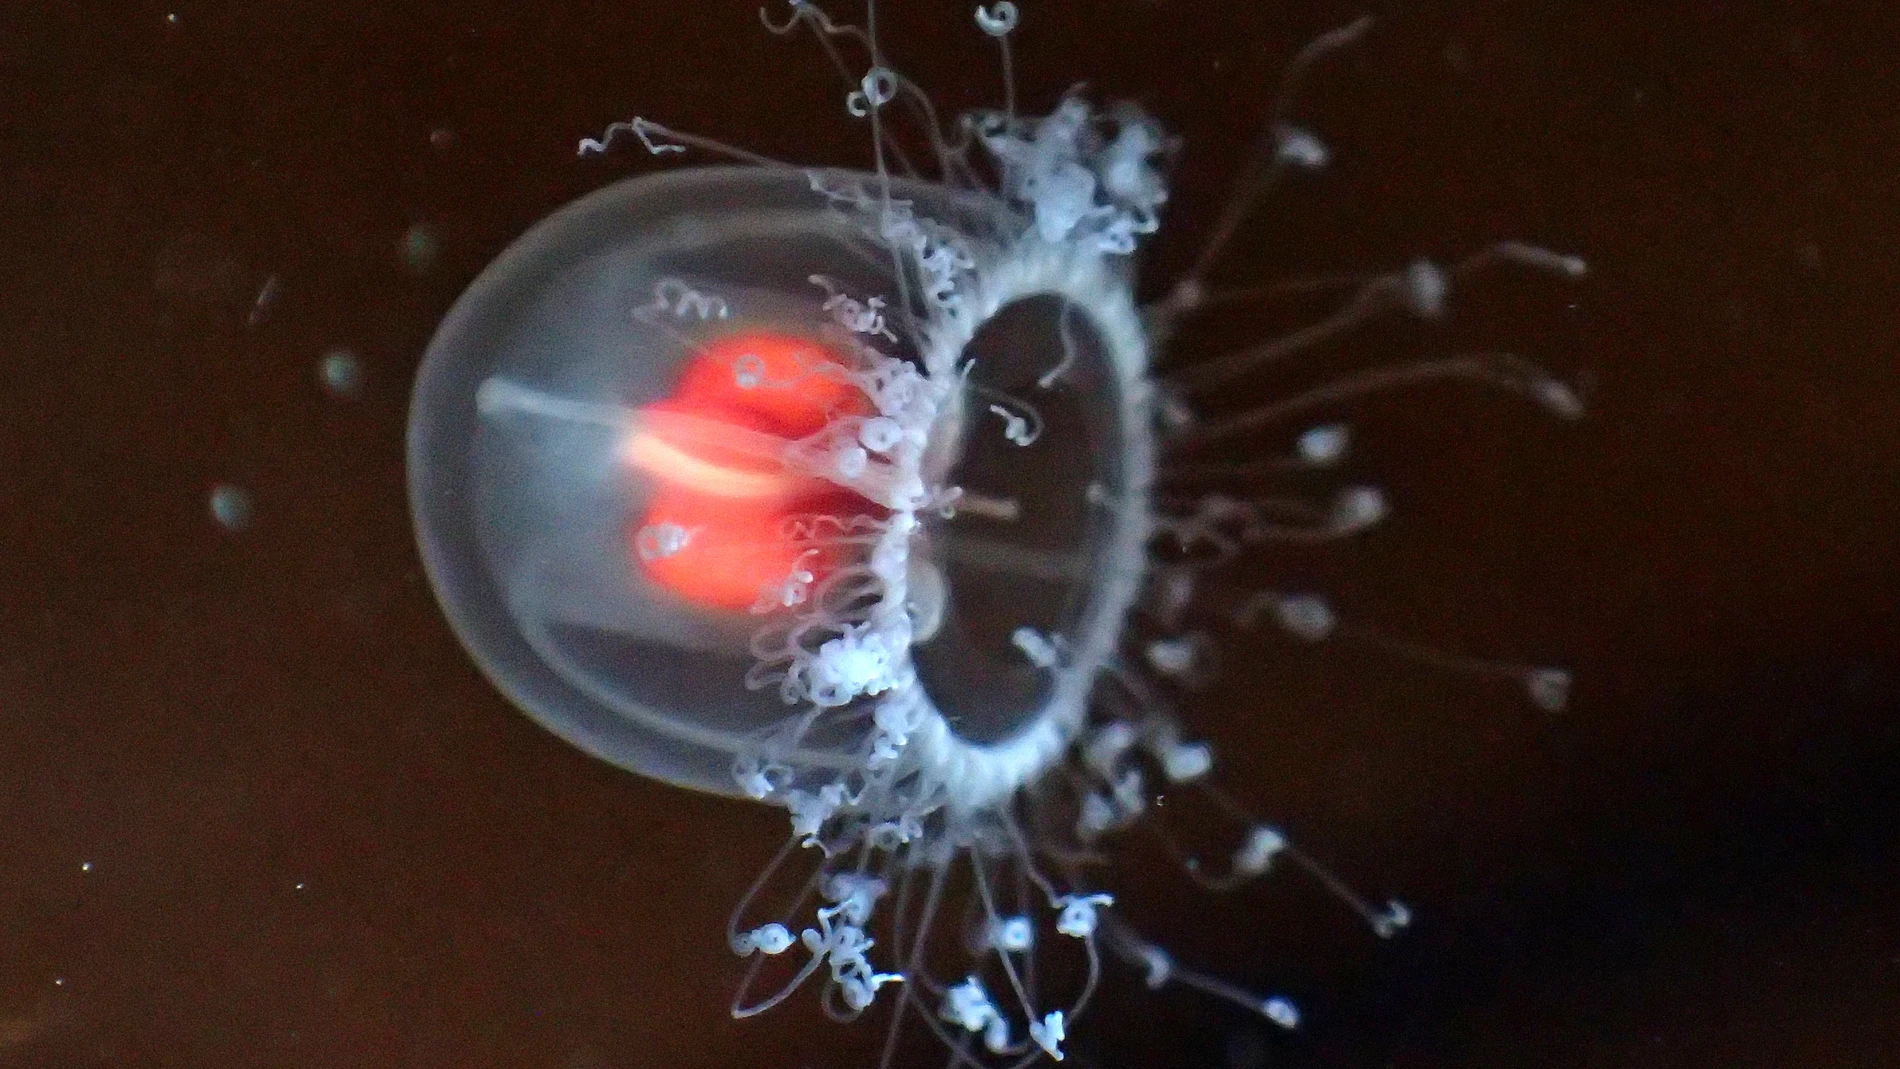 Fotografía de la medusa "Turritopsis nutricula" | Fuente: commons.wikimedia.org